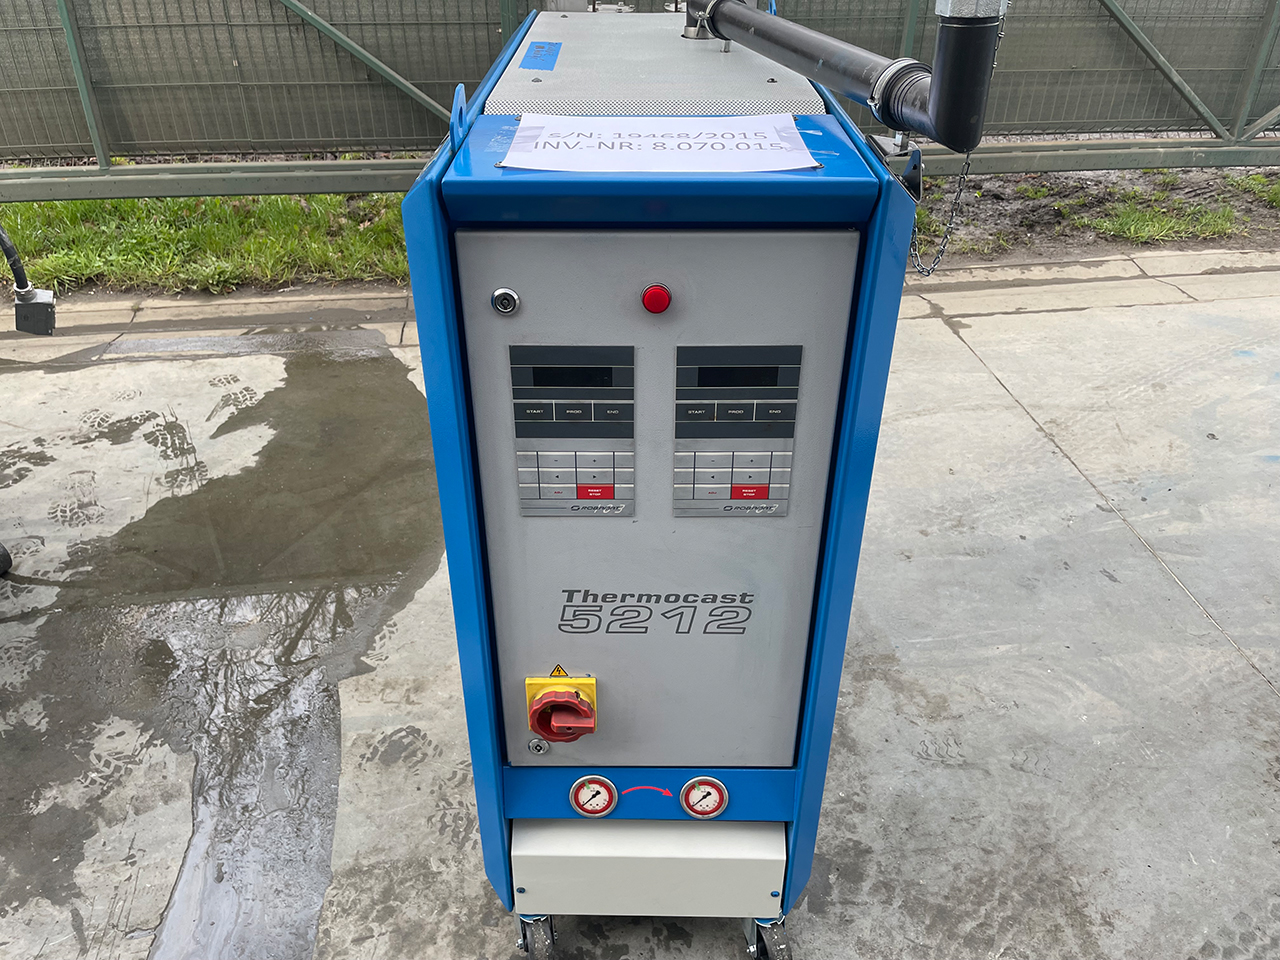 Robamat Thermocast 5212 oil temperature control unit ZU2215, used